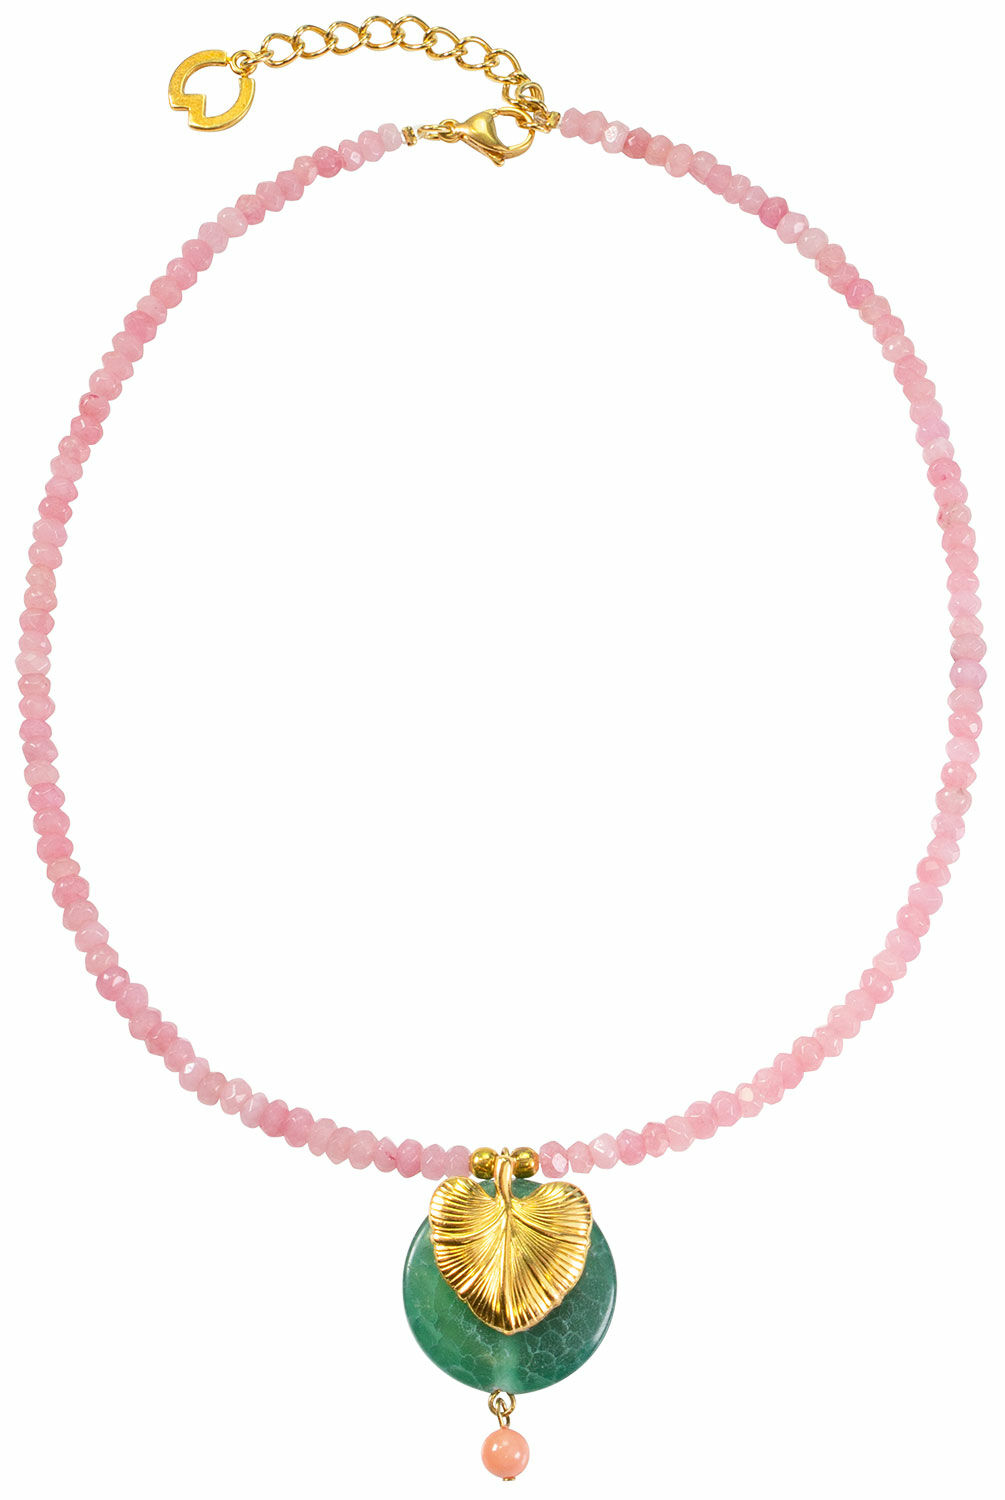 Pearl necklace "Sakura" by Petra Waszak